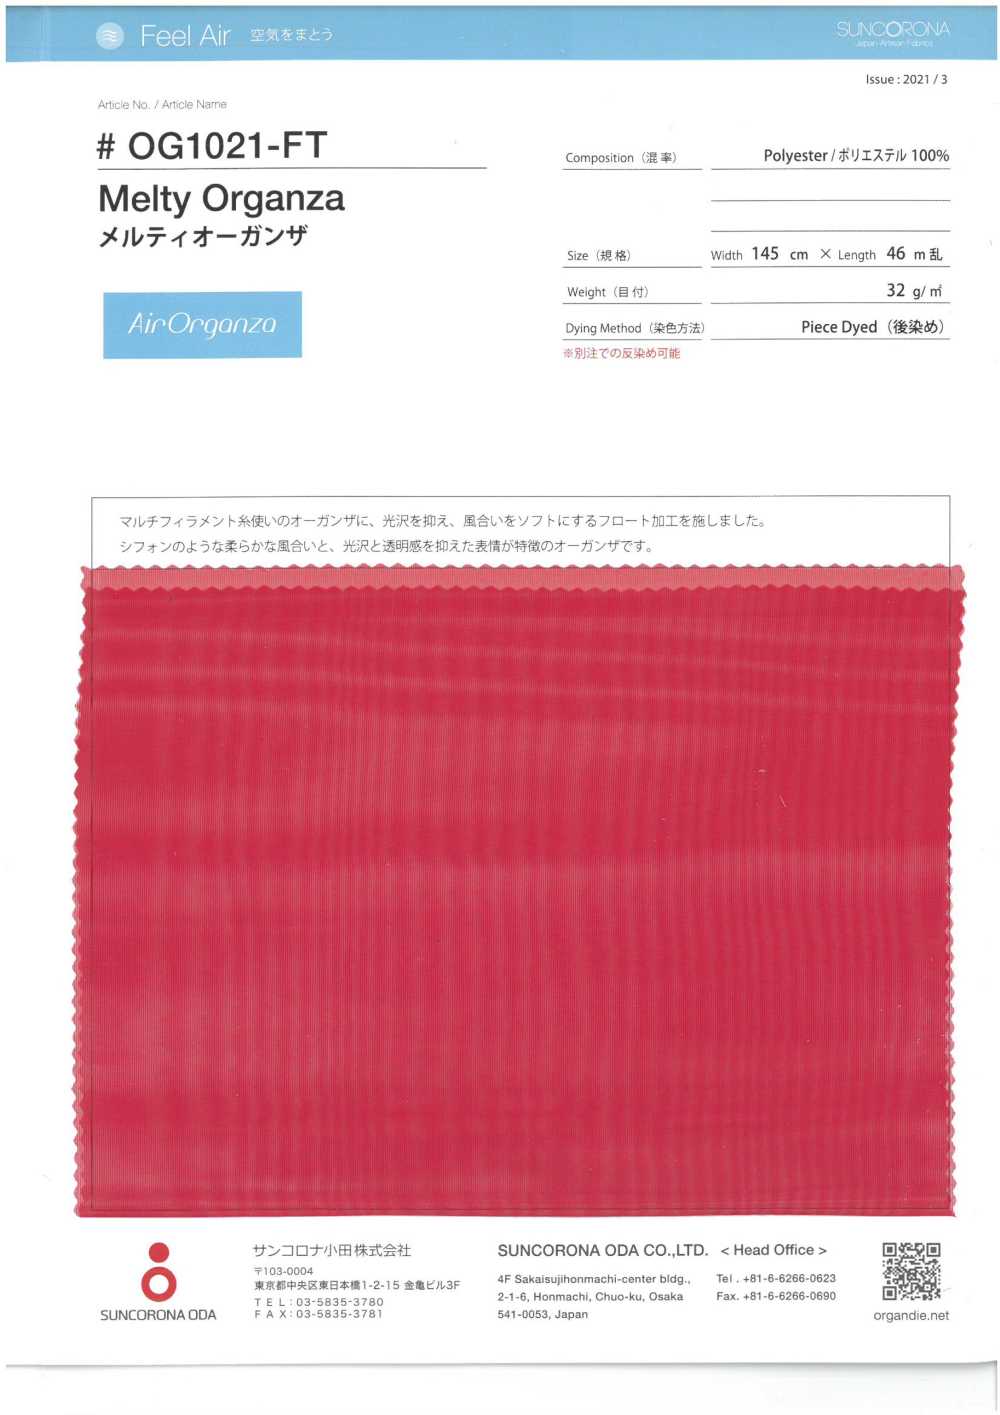 OG1021-FT Melty Organza[Textile / Fabric] Suncorona Oda